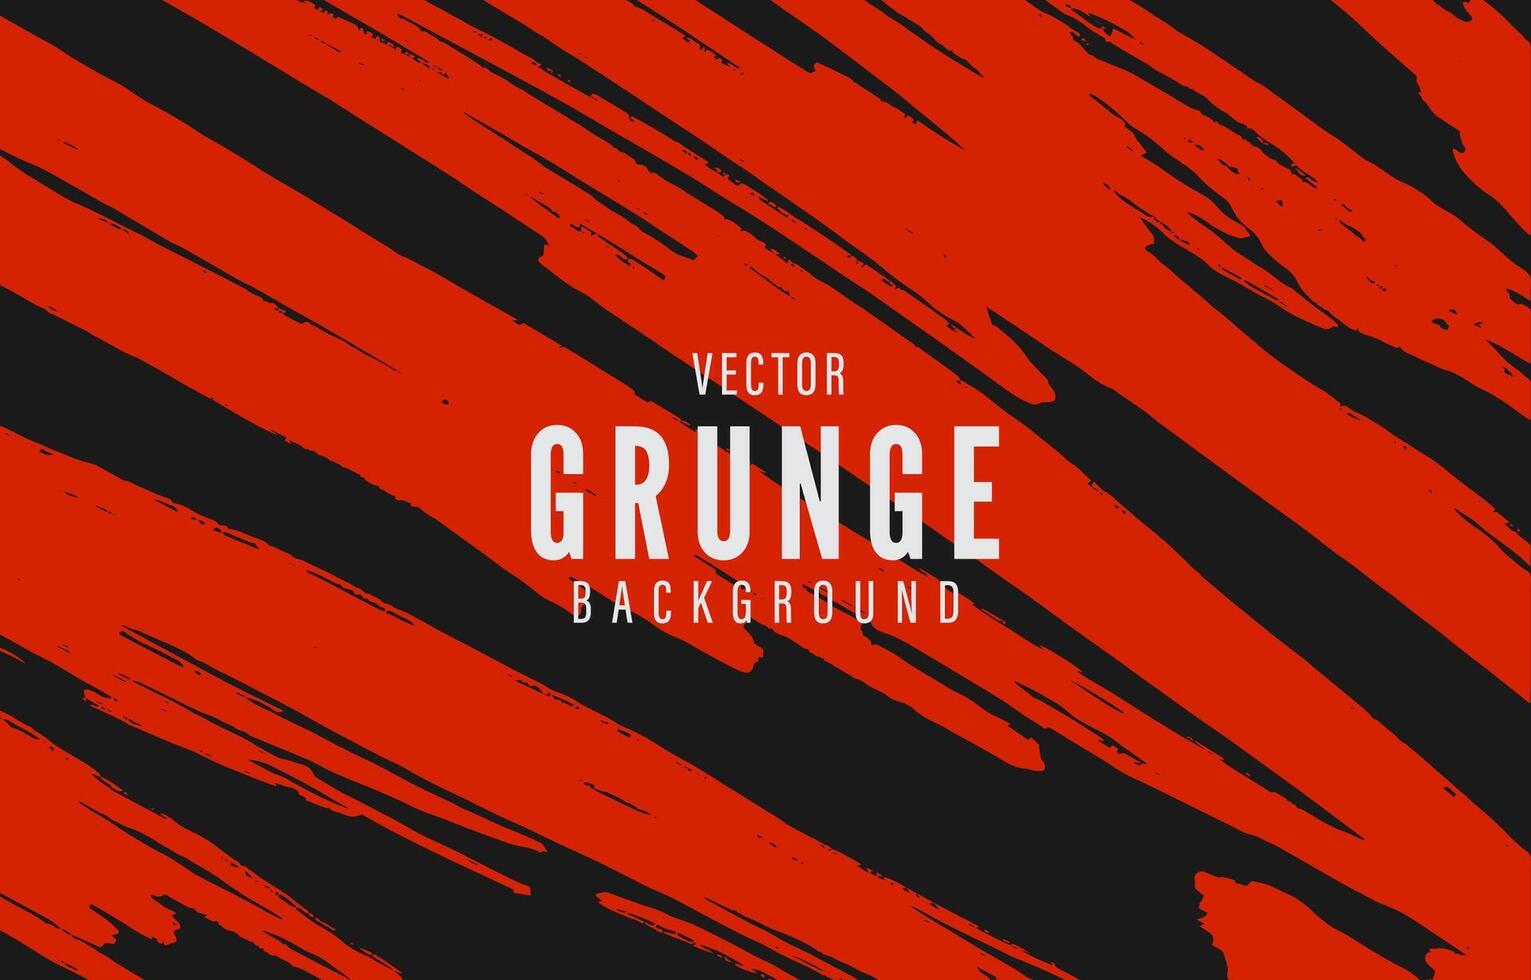 Vector grunge in red background